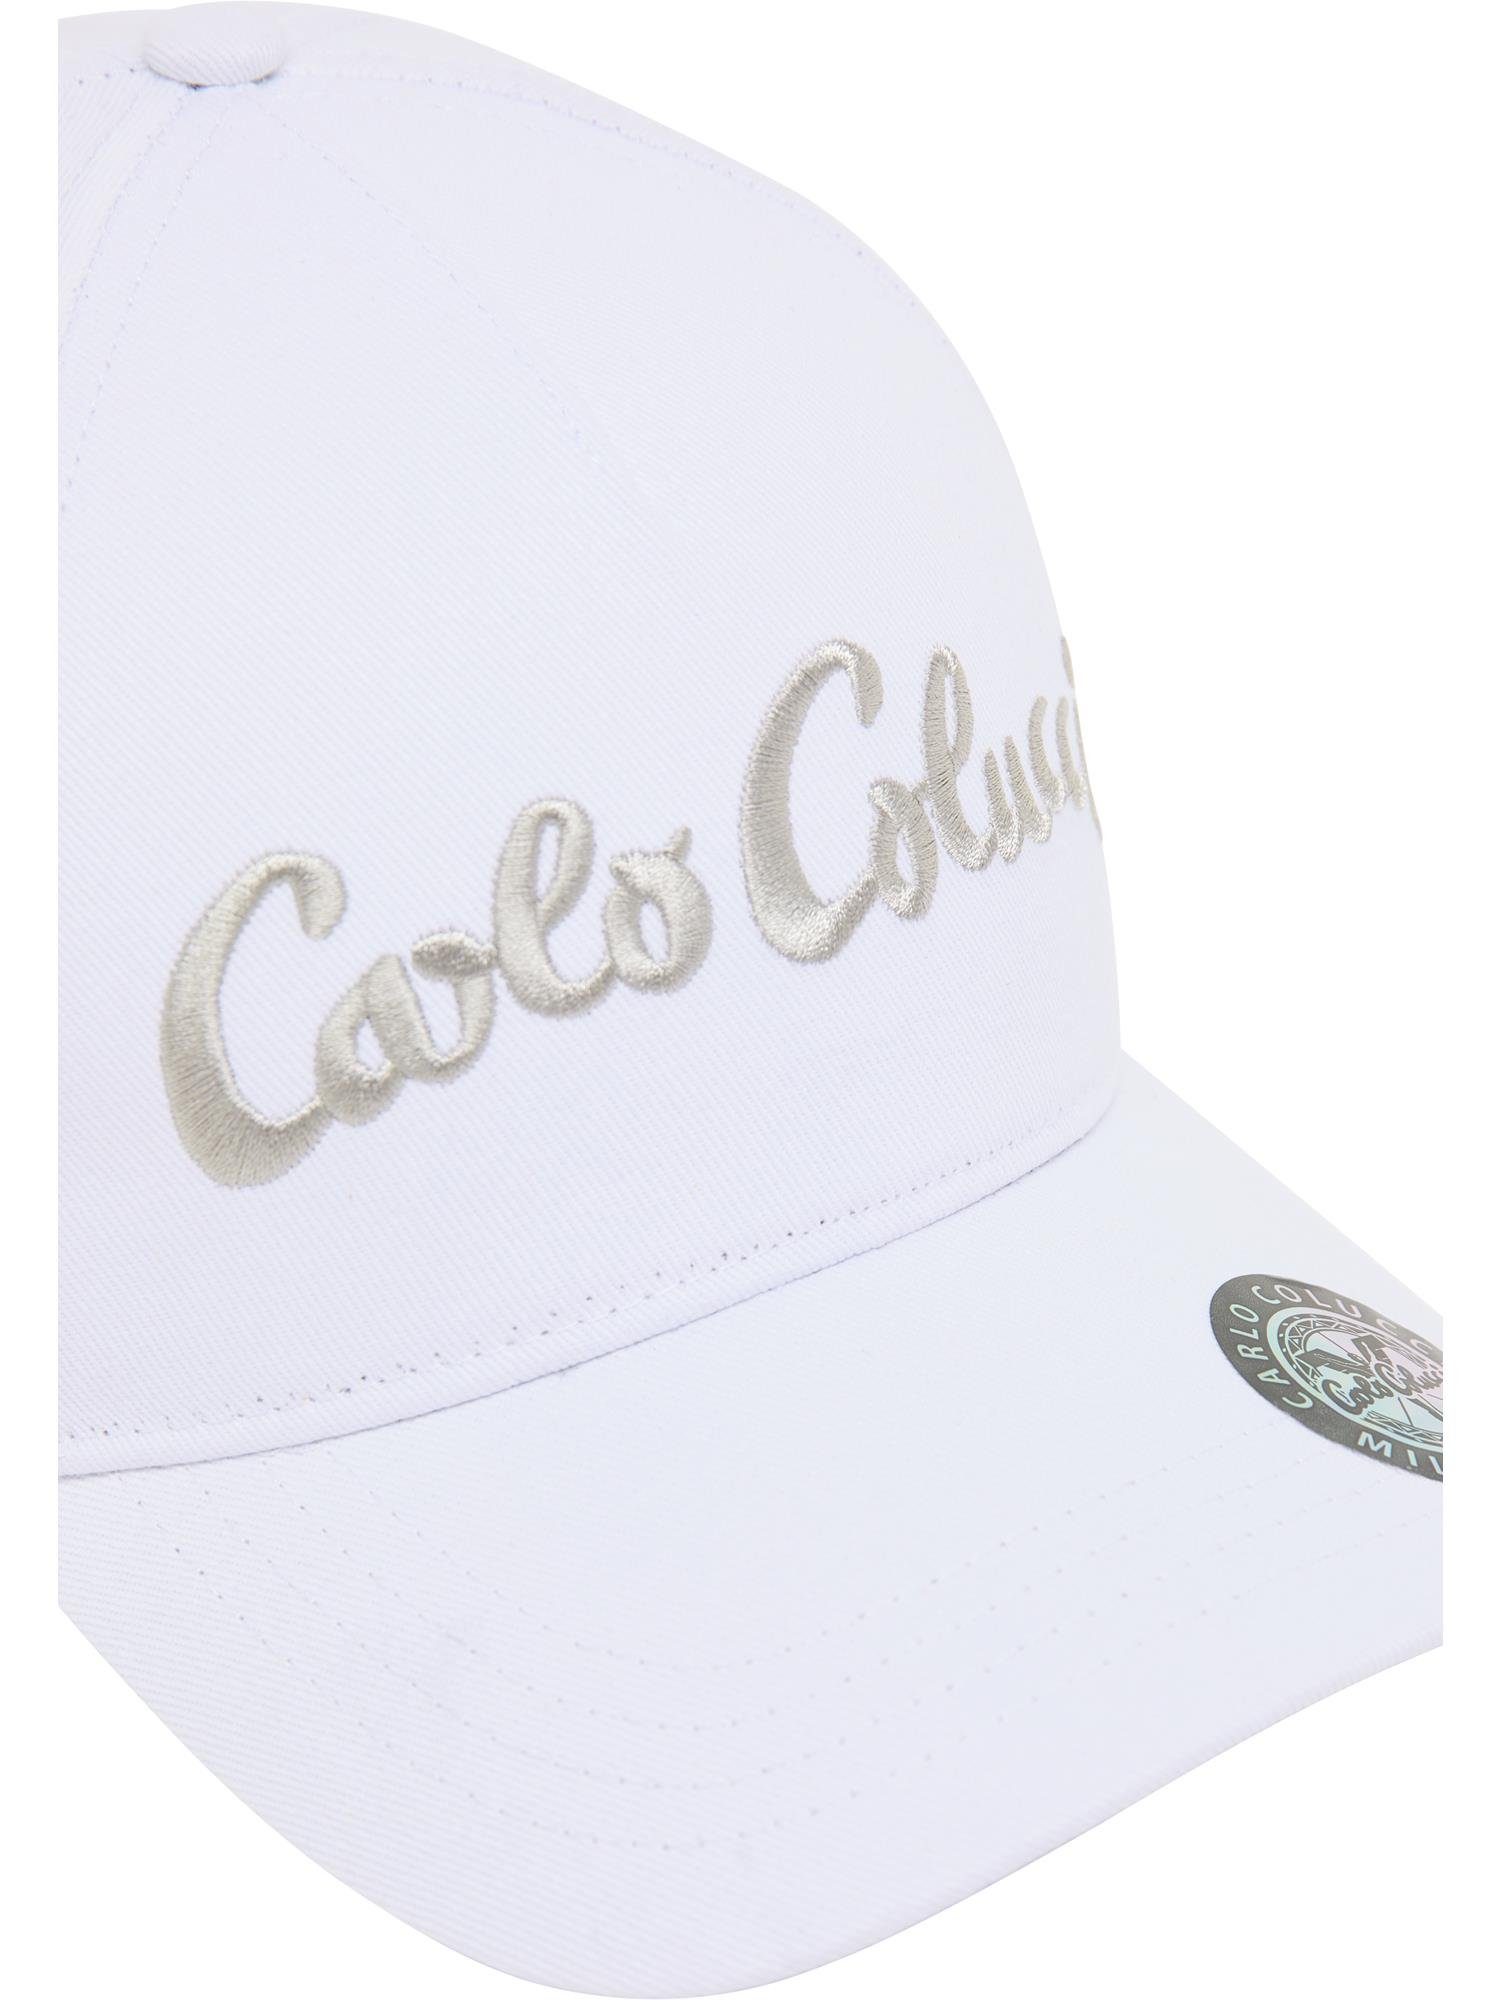 COLUCCI CARLO Coronet Baseball Cap